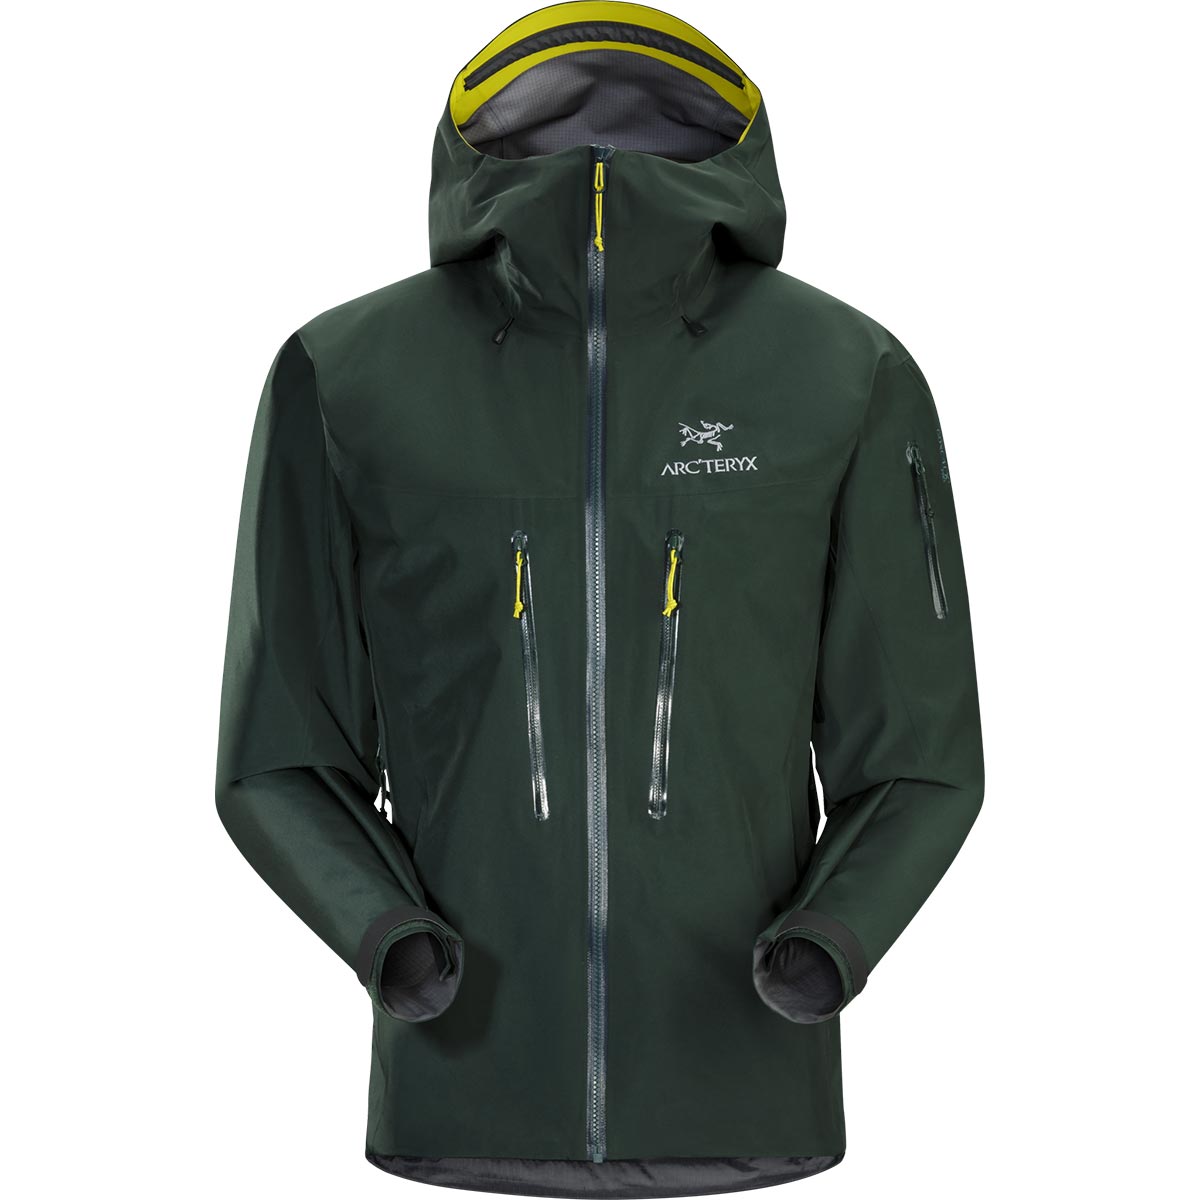 Arc'teryx Alpha SV Jacket, men's, discontinued Spring 2019 colors 